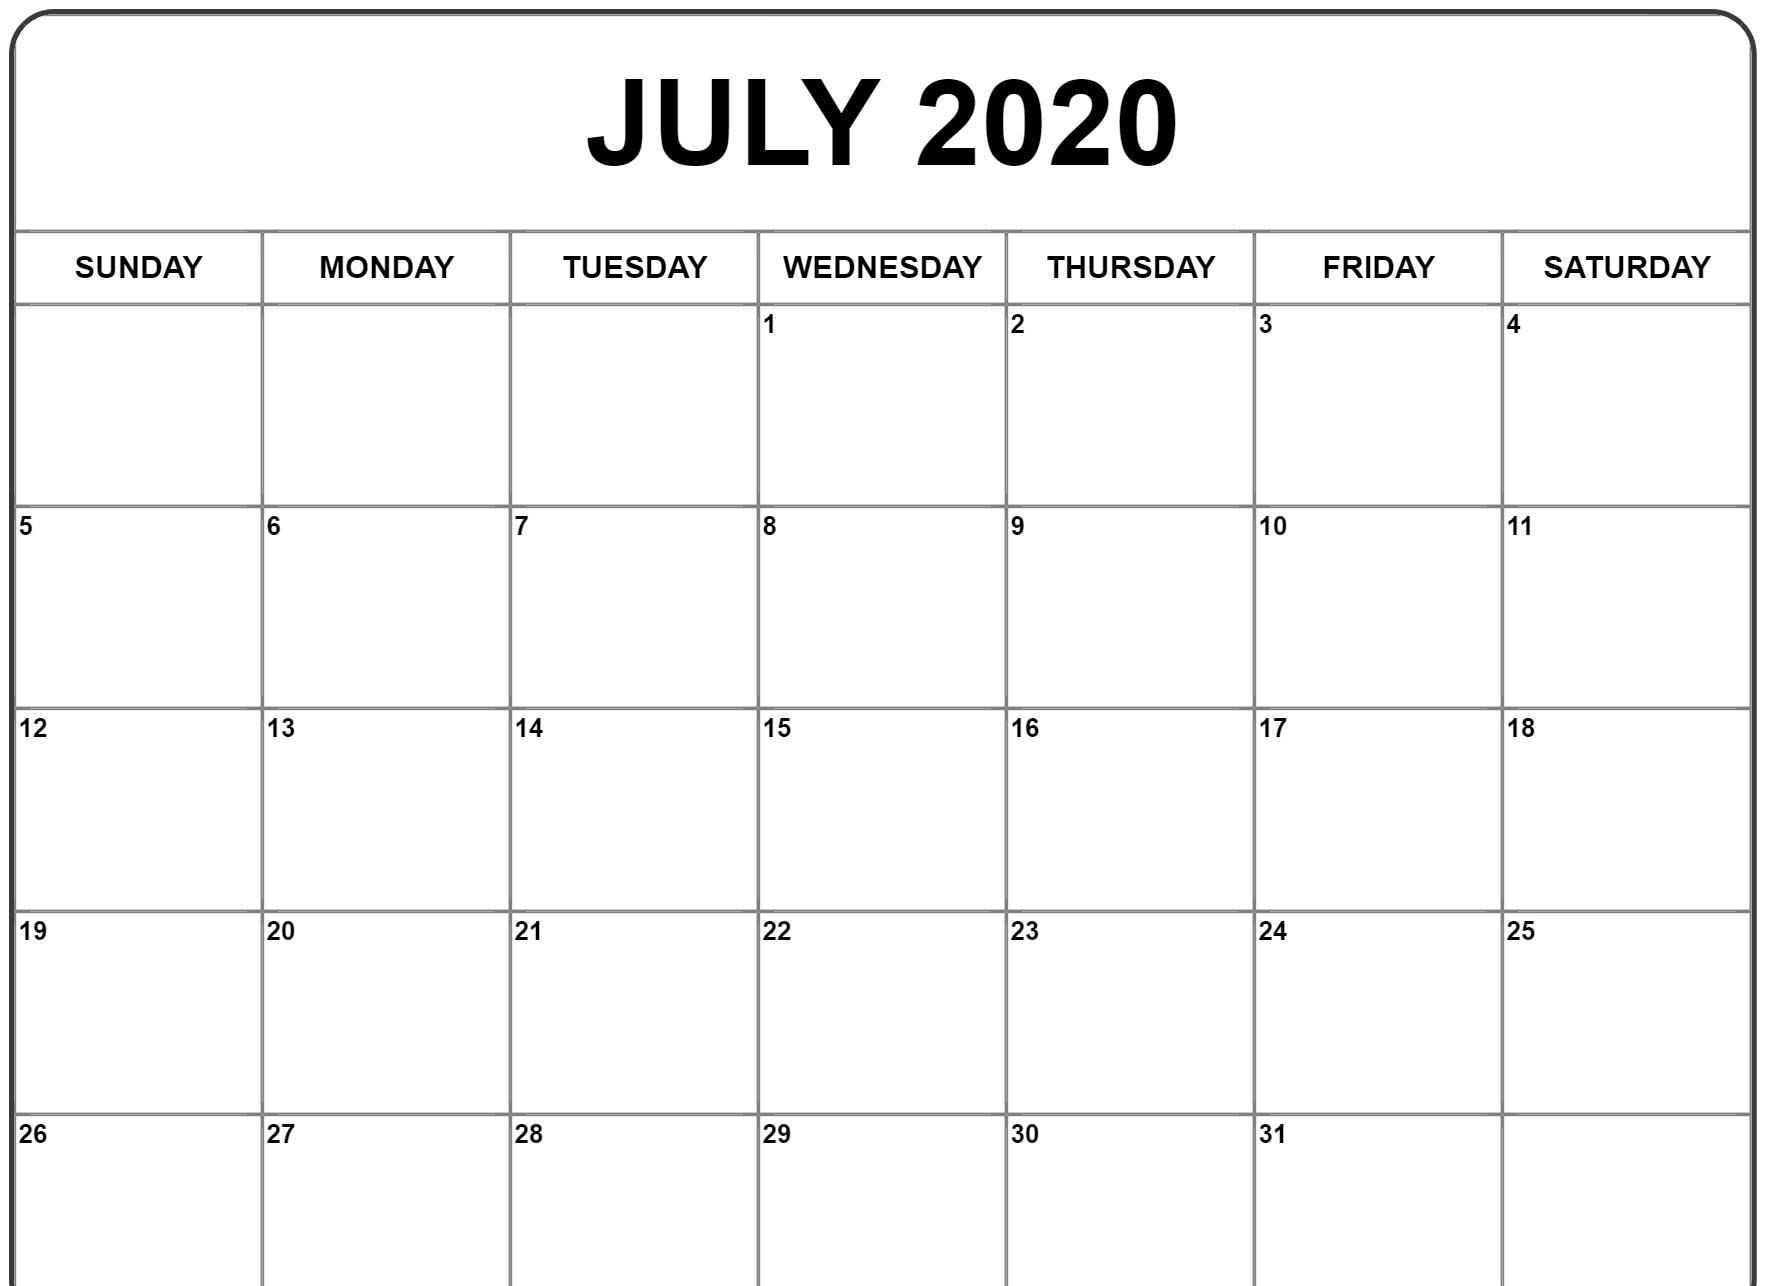 fillable july 2020 calendar templates in 2020 | calendar